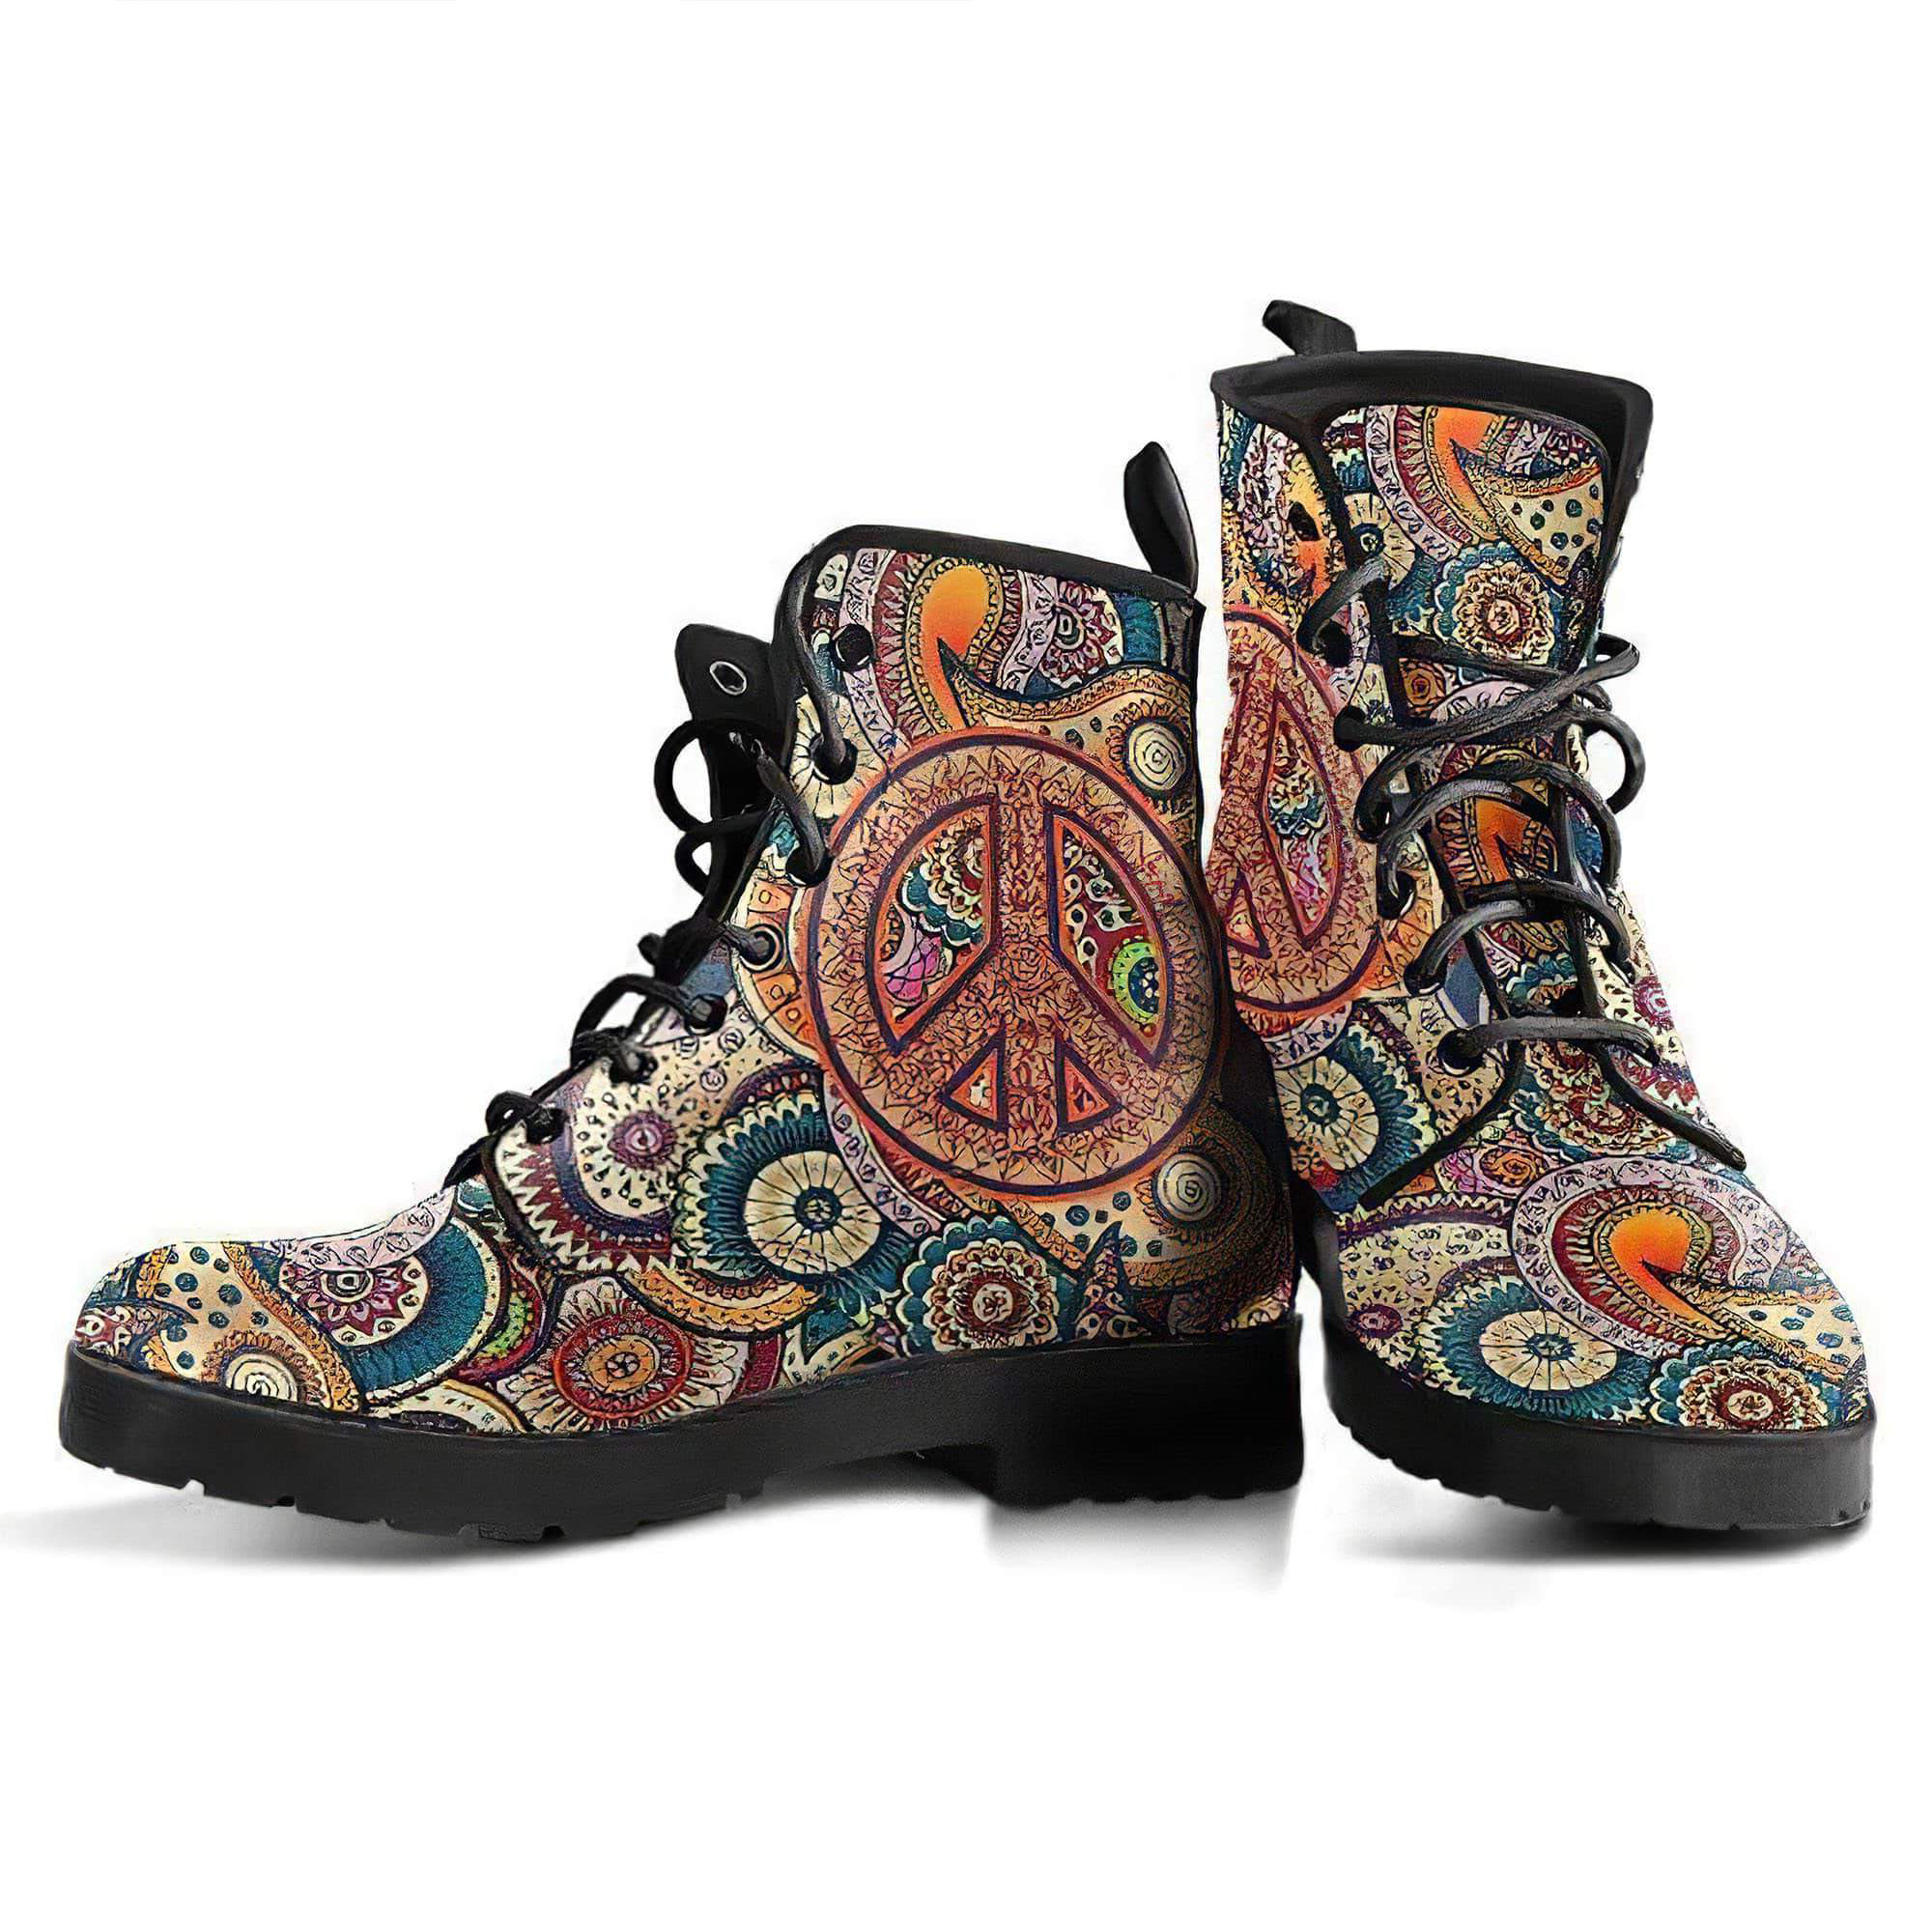 peace-henna-mandala-women-s-boots-vegan-friendly-leather-women-s-leather-boots-12051925368893.jpg